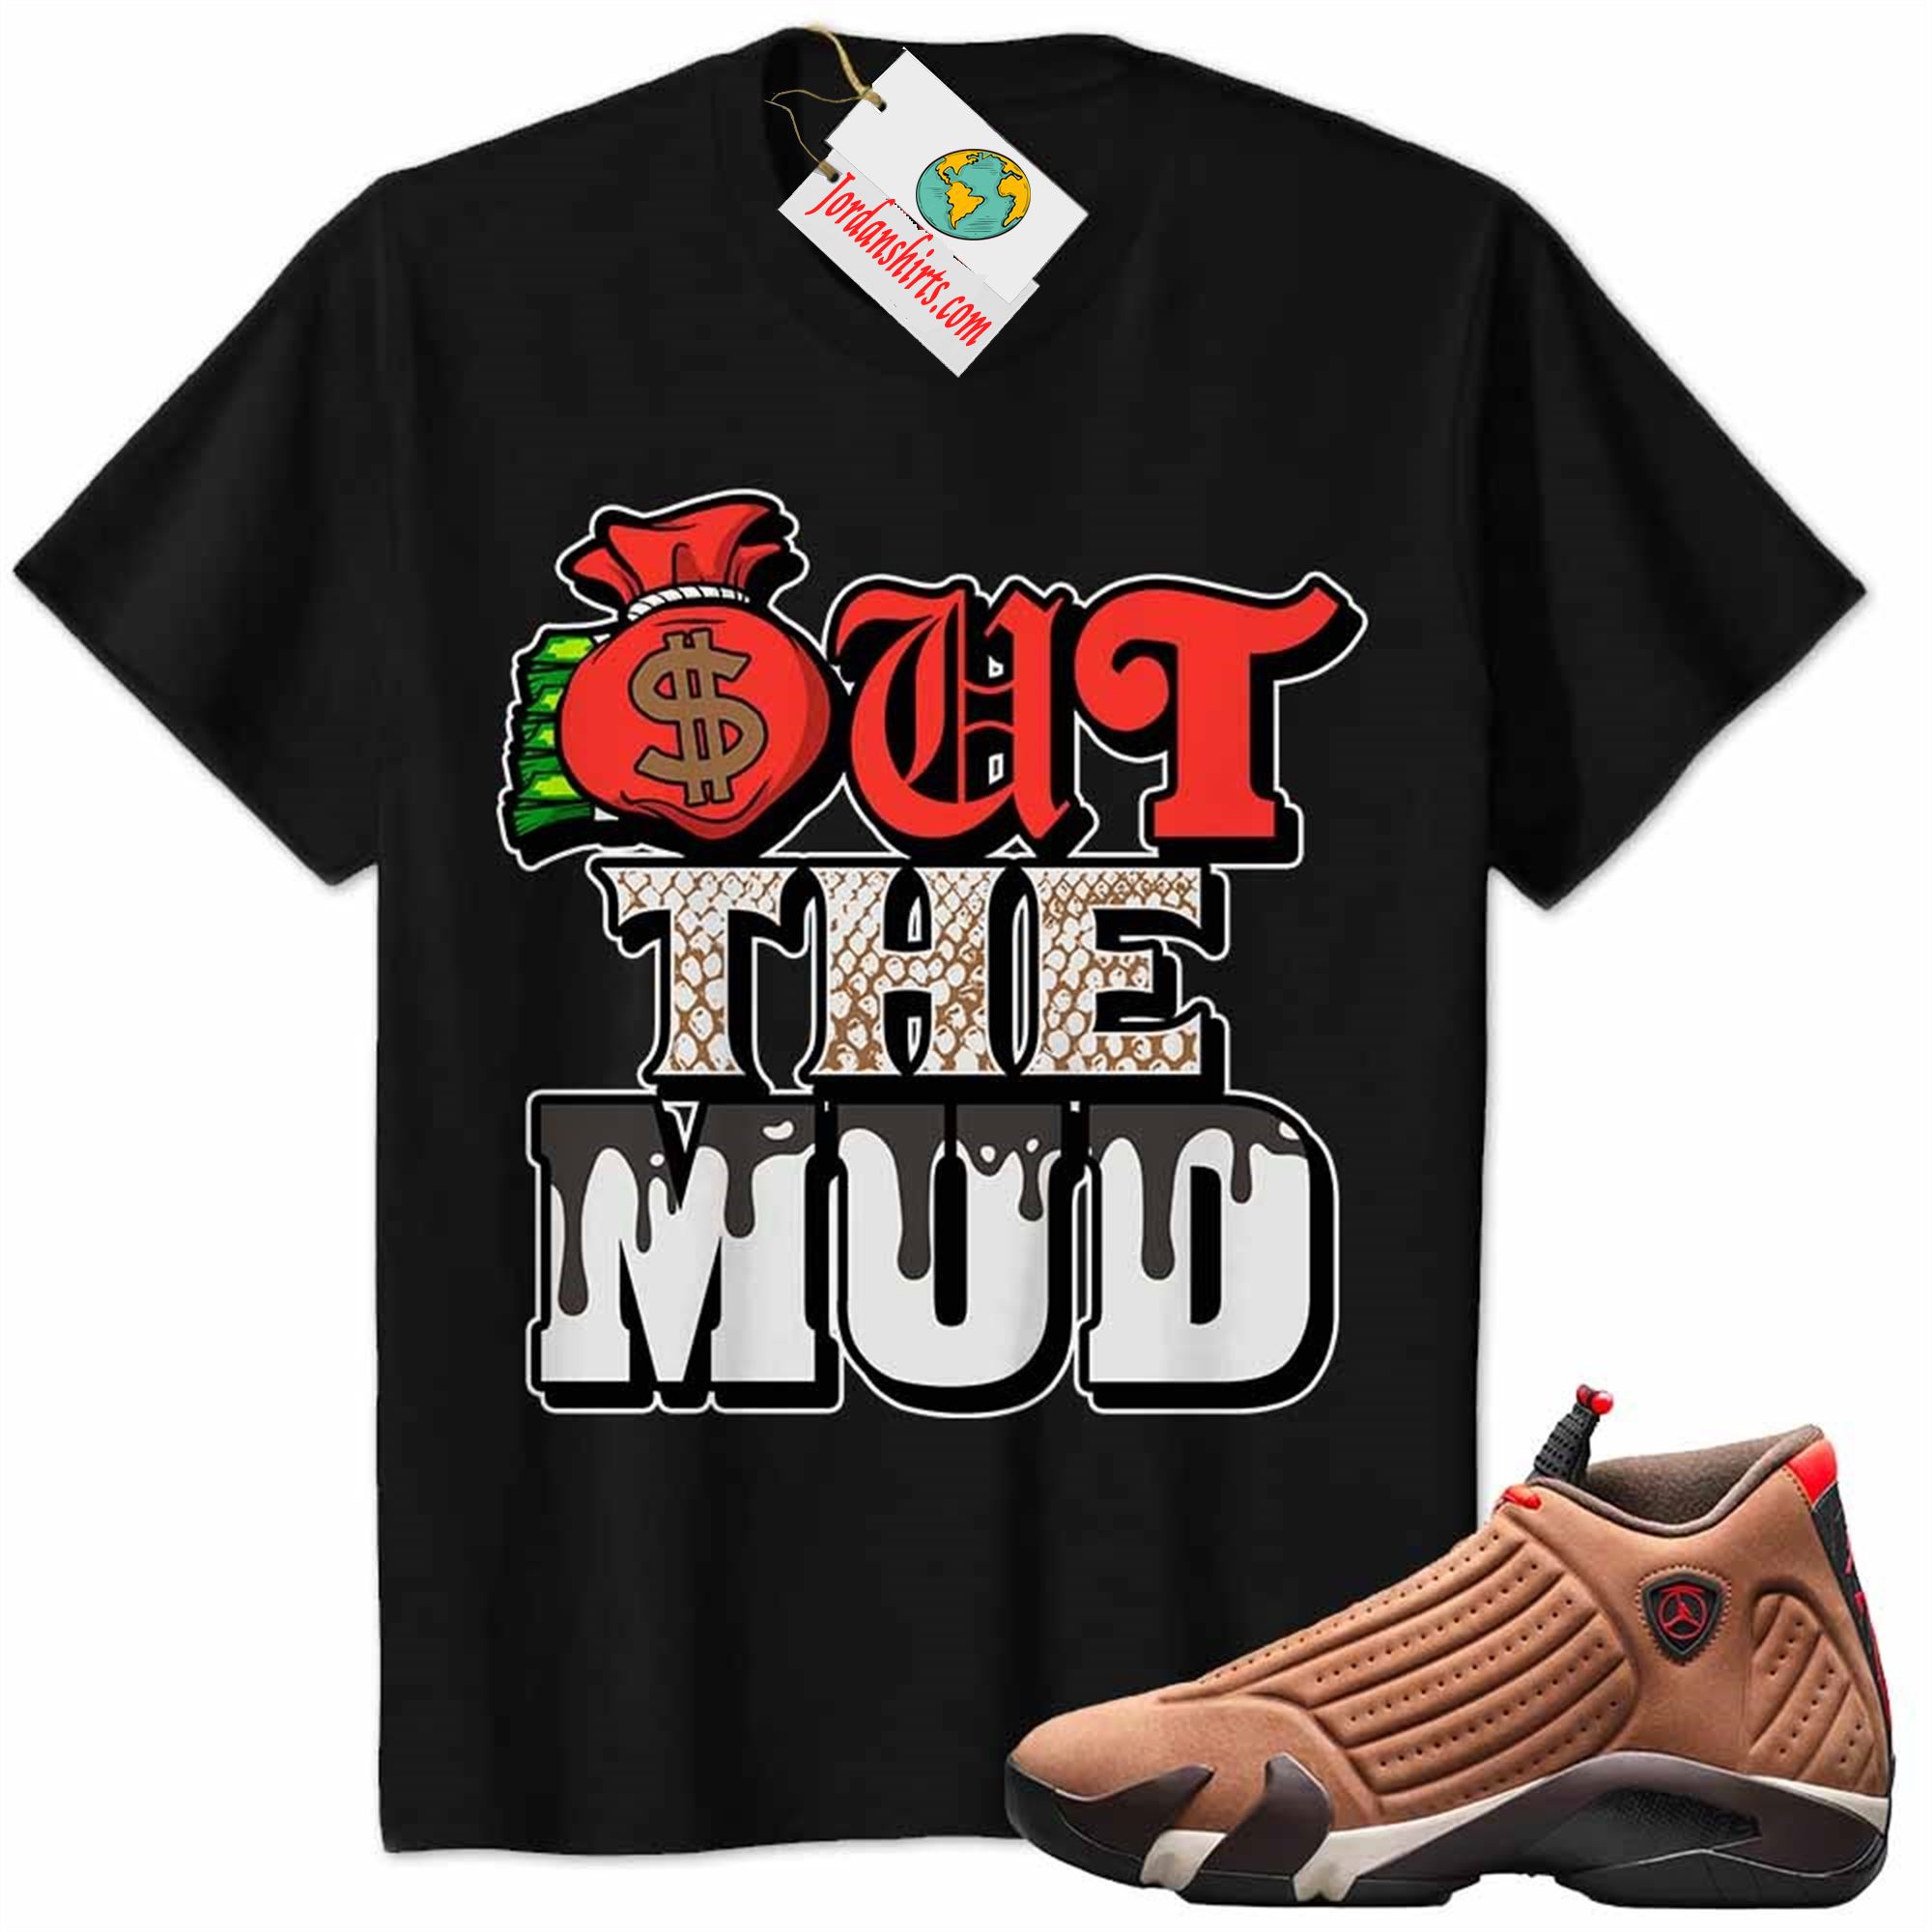 Jordan 14 Shirt, Jordan 14 Winterized Shirt Out The Mud Money Bag Black Size Up To 5xl